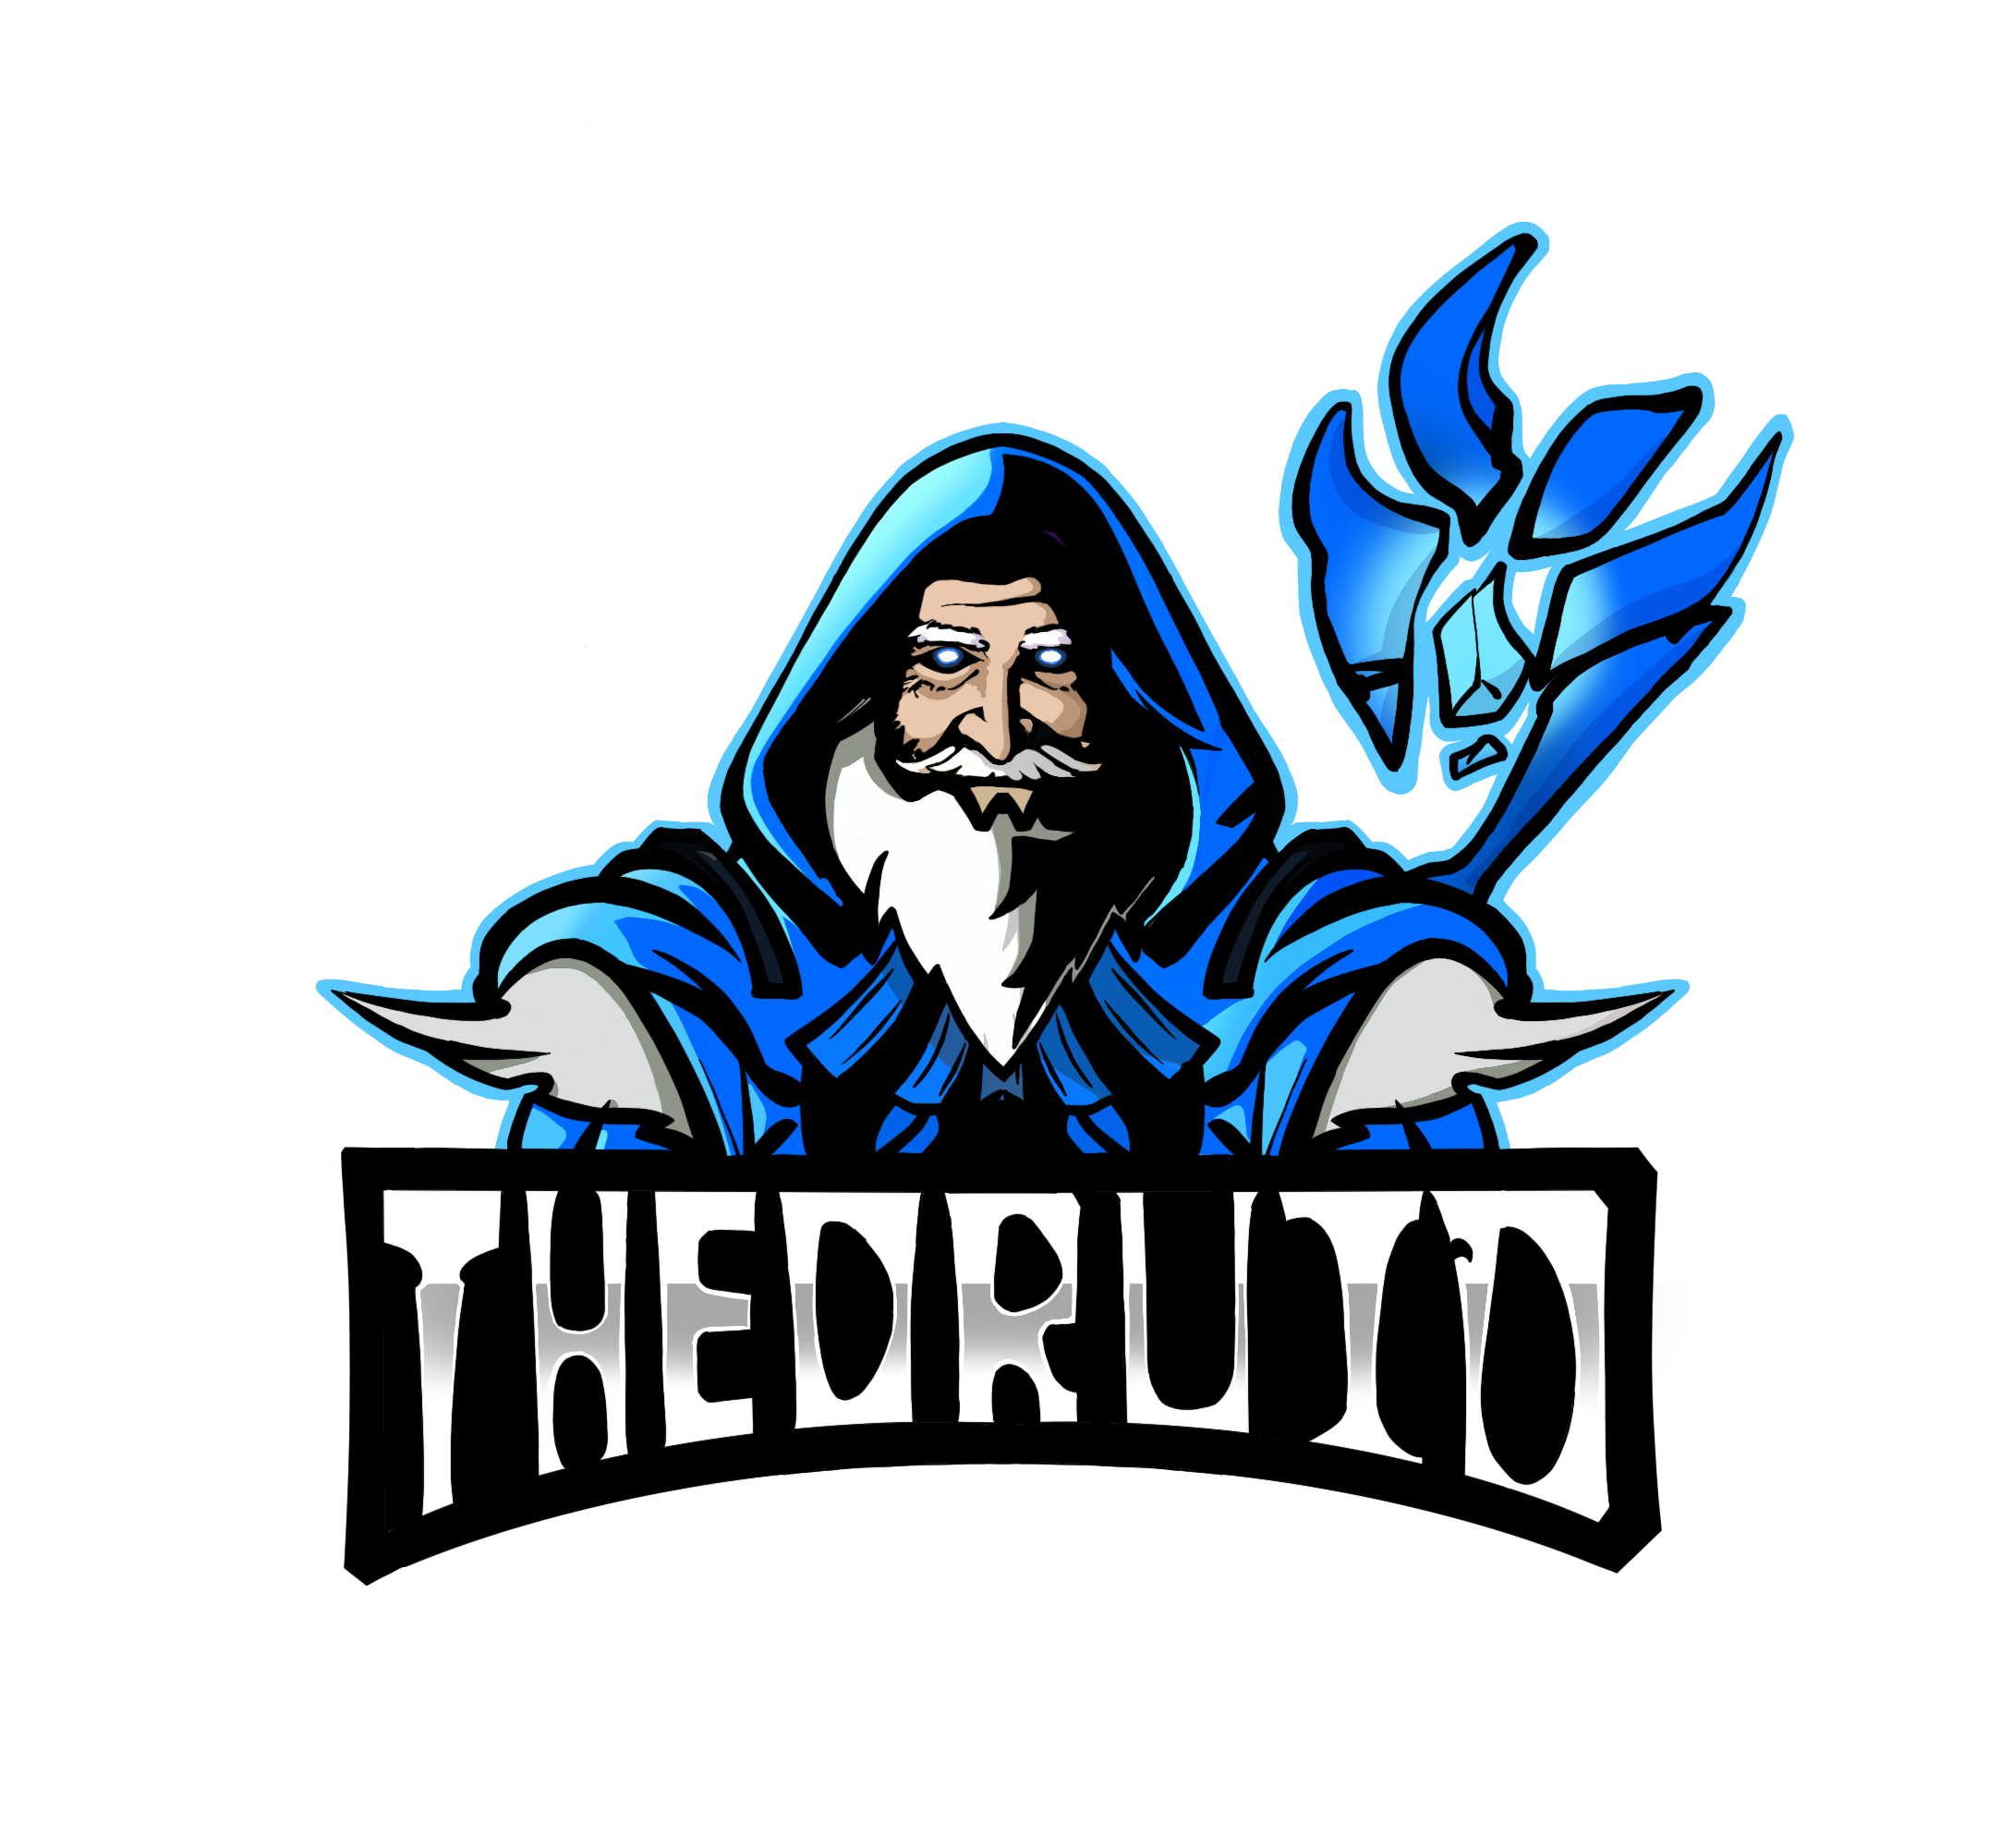 The Druid